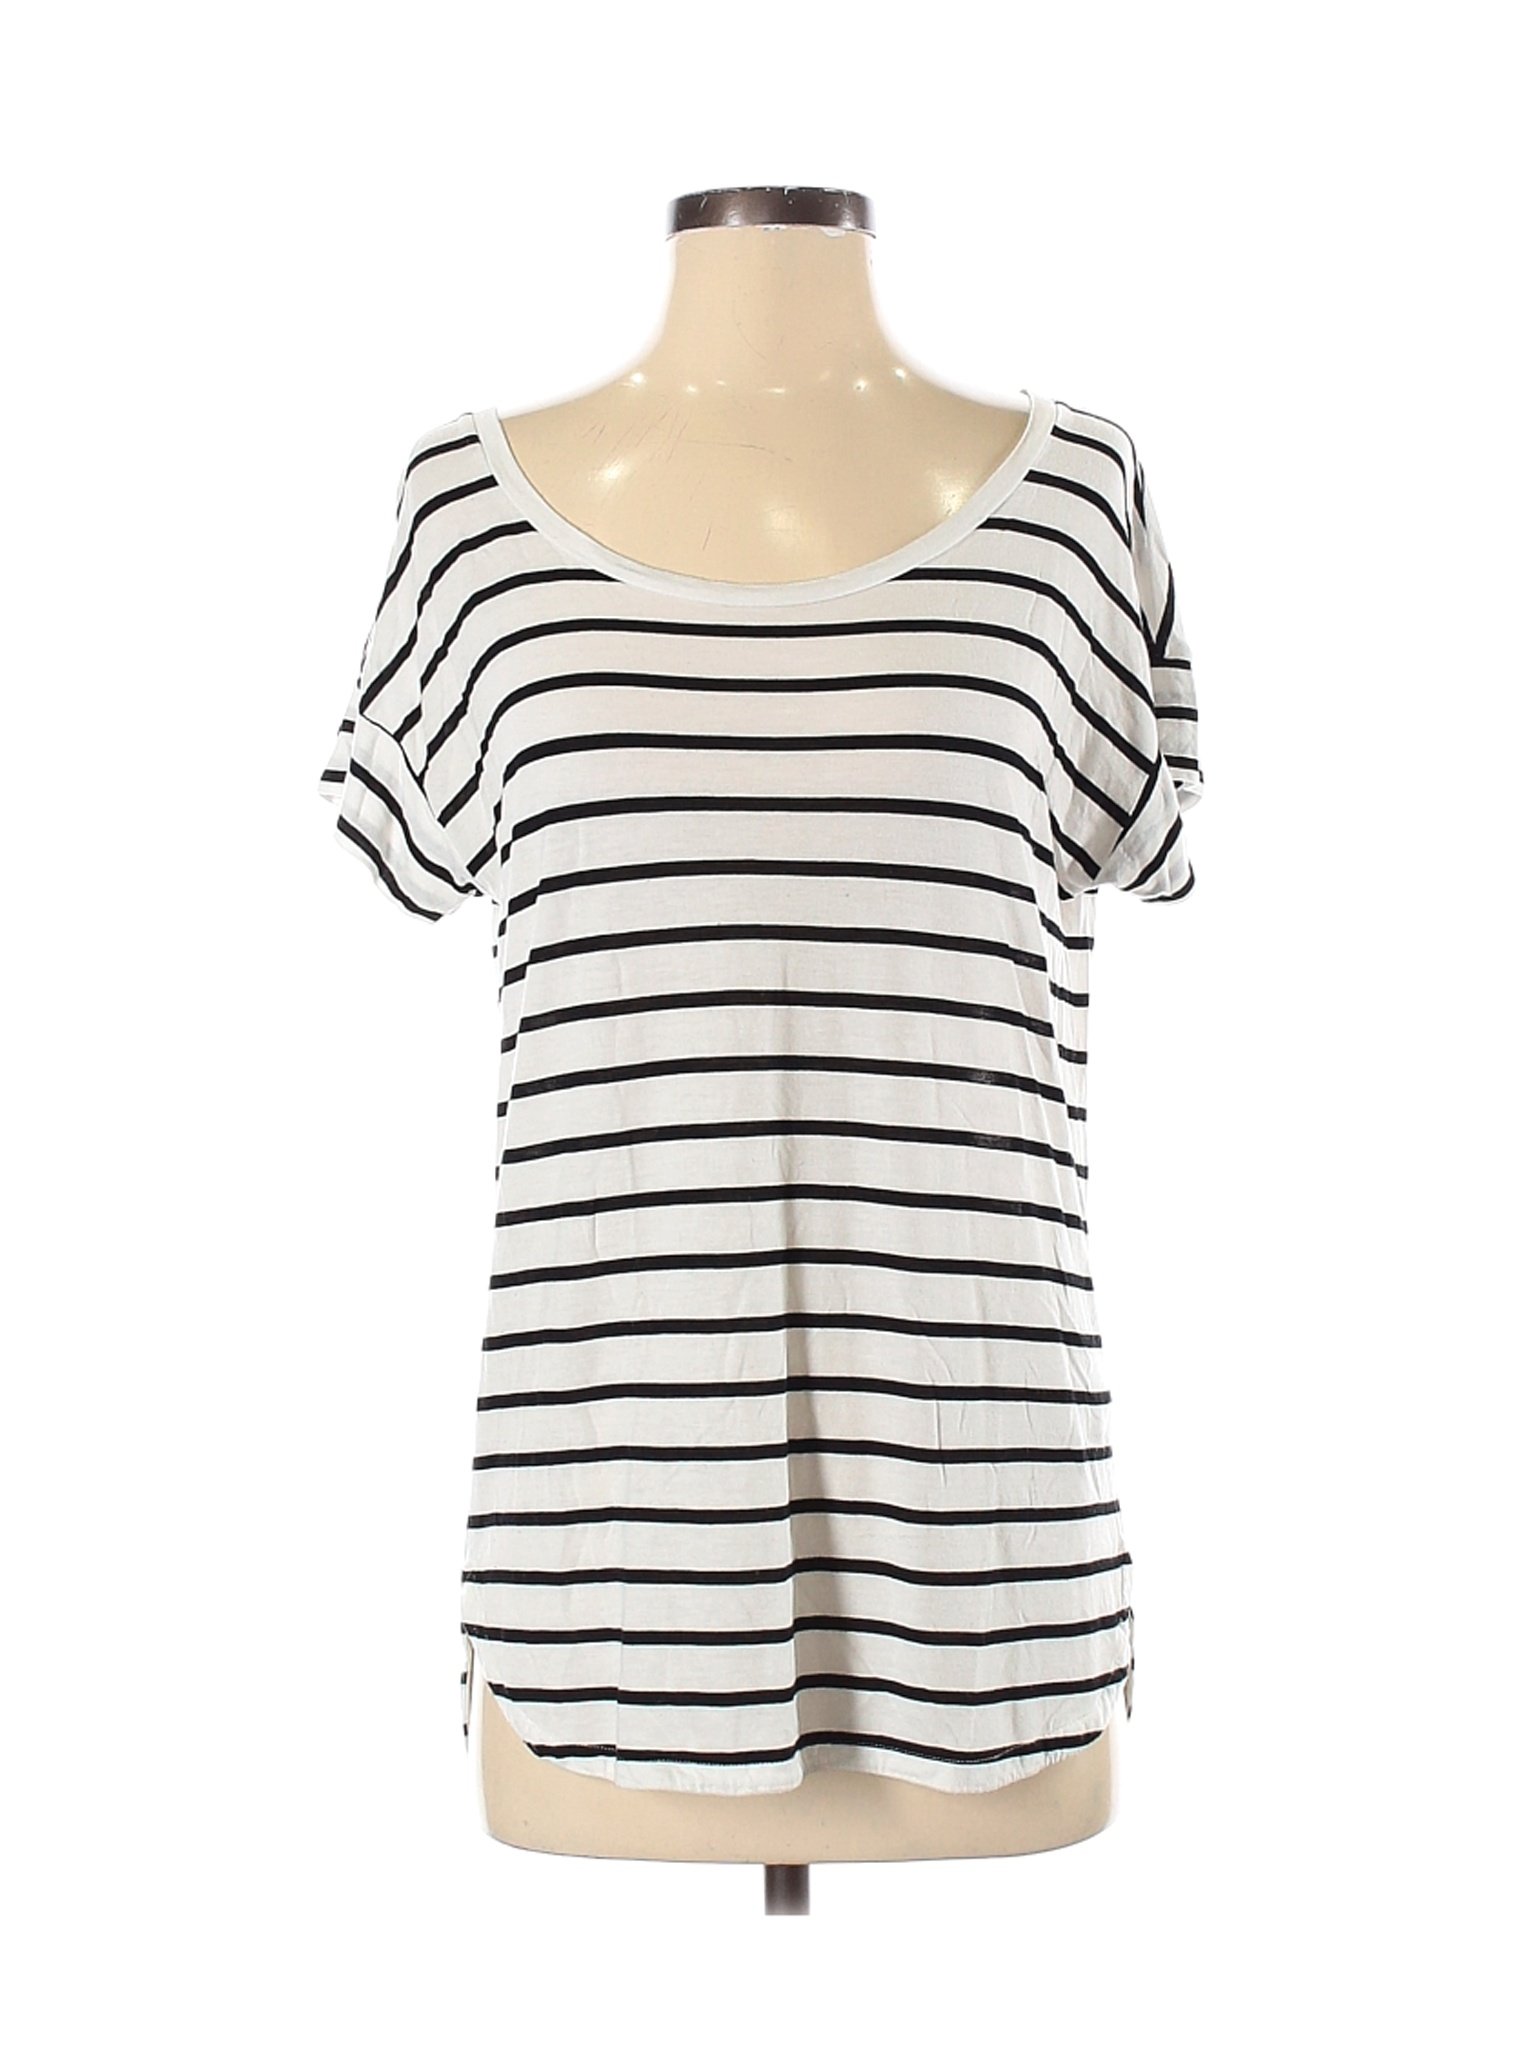 Gap Women White Short Sleeve T-Shirt XS | eBay